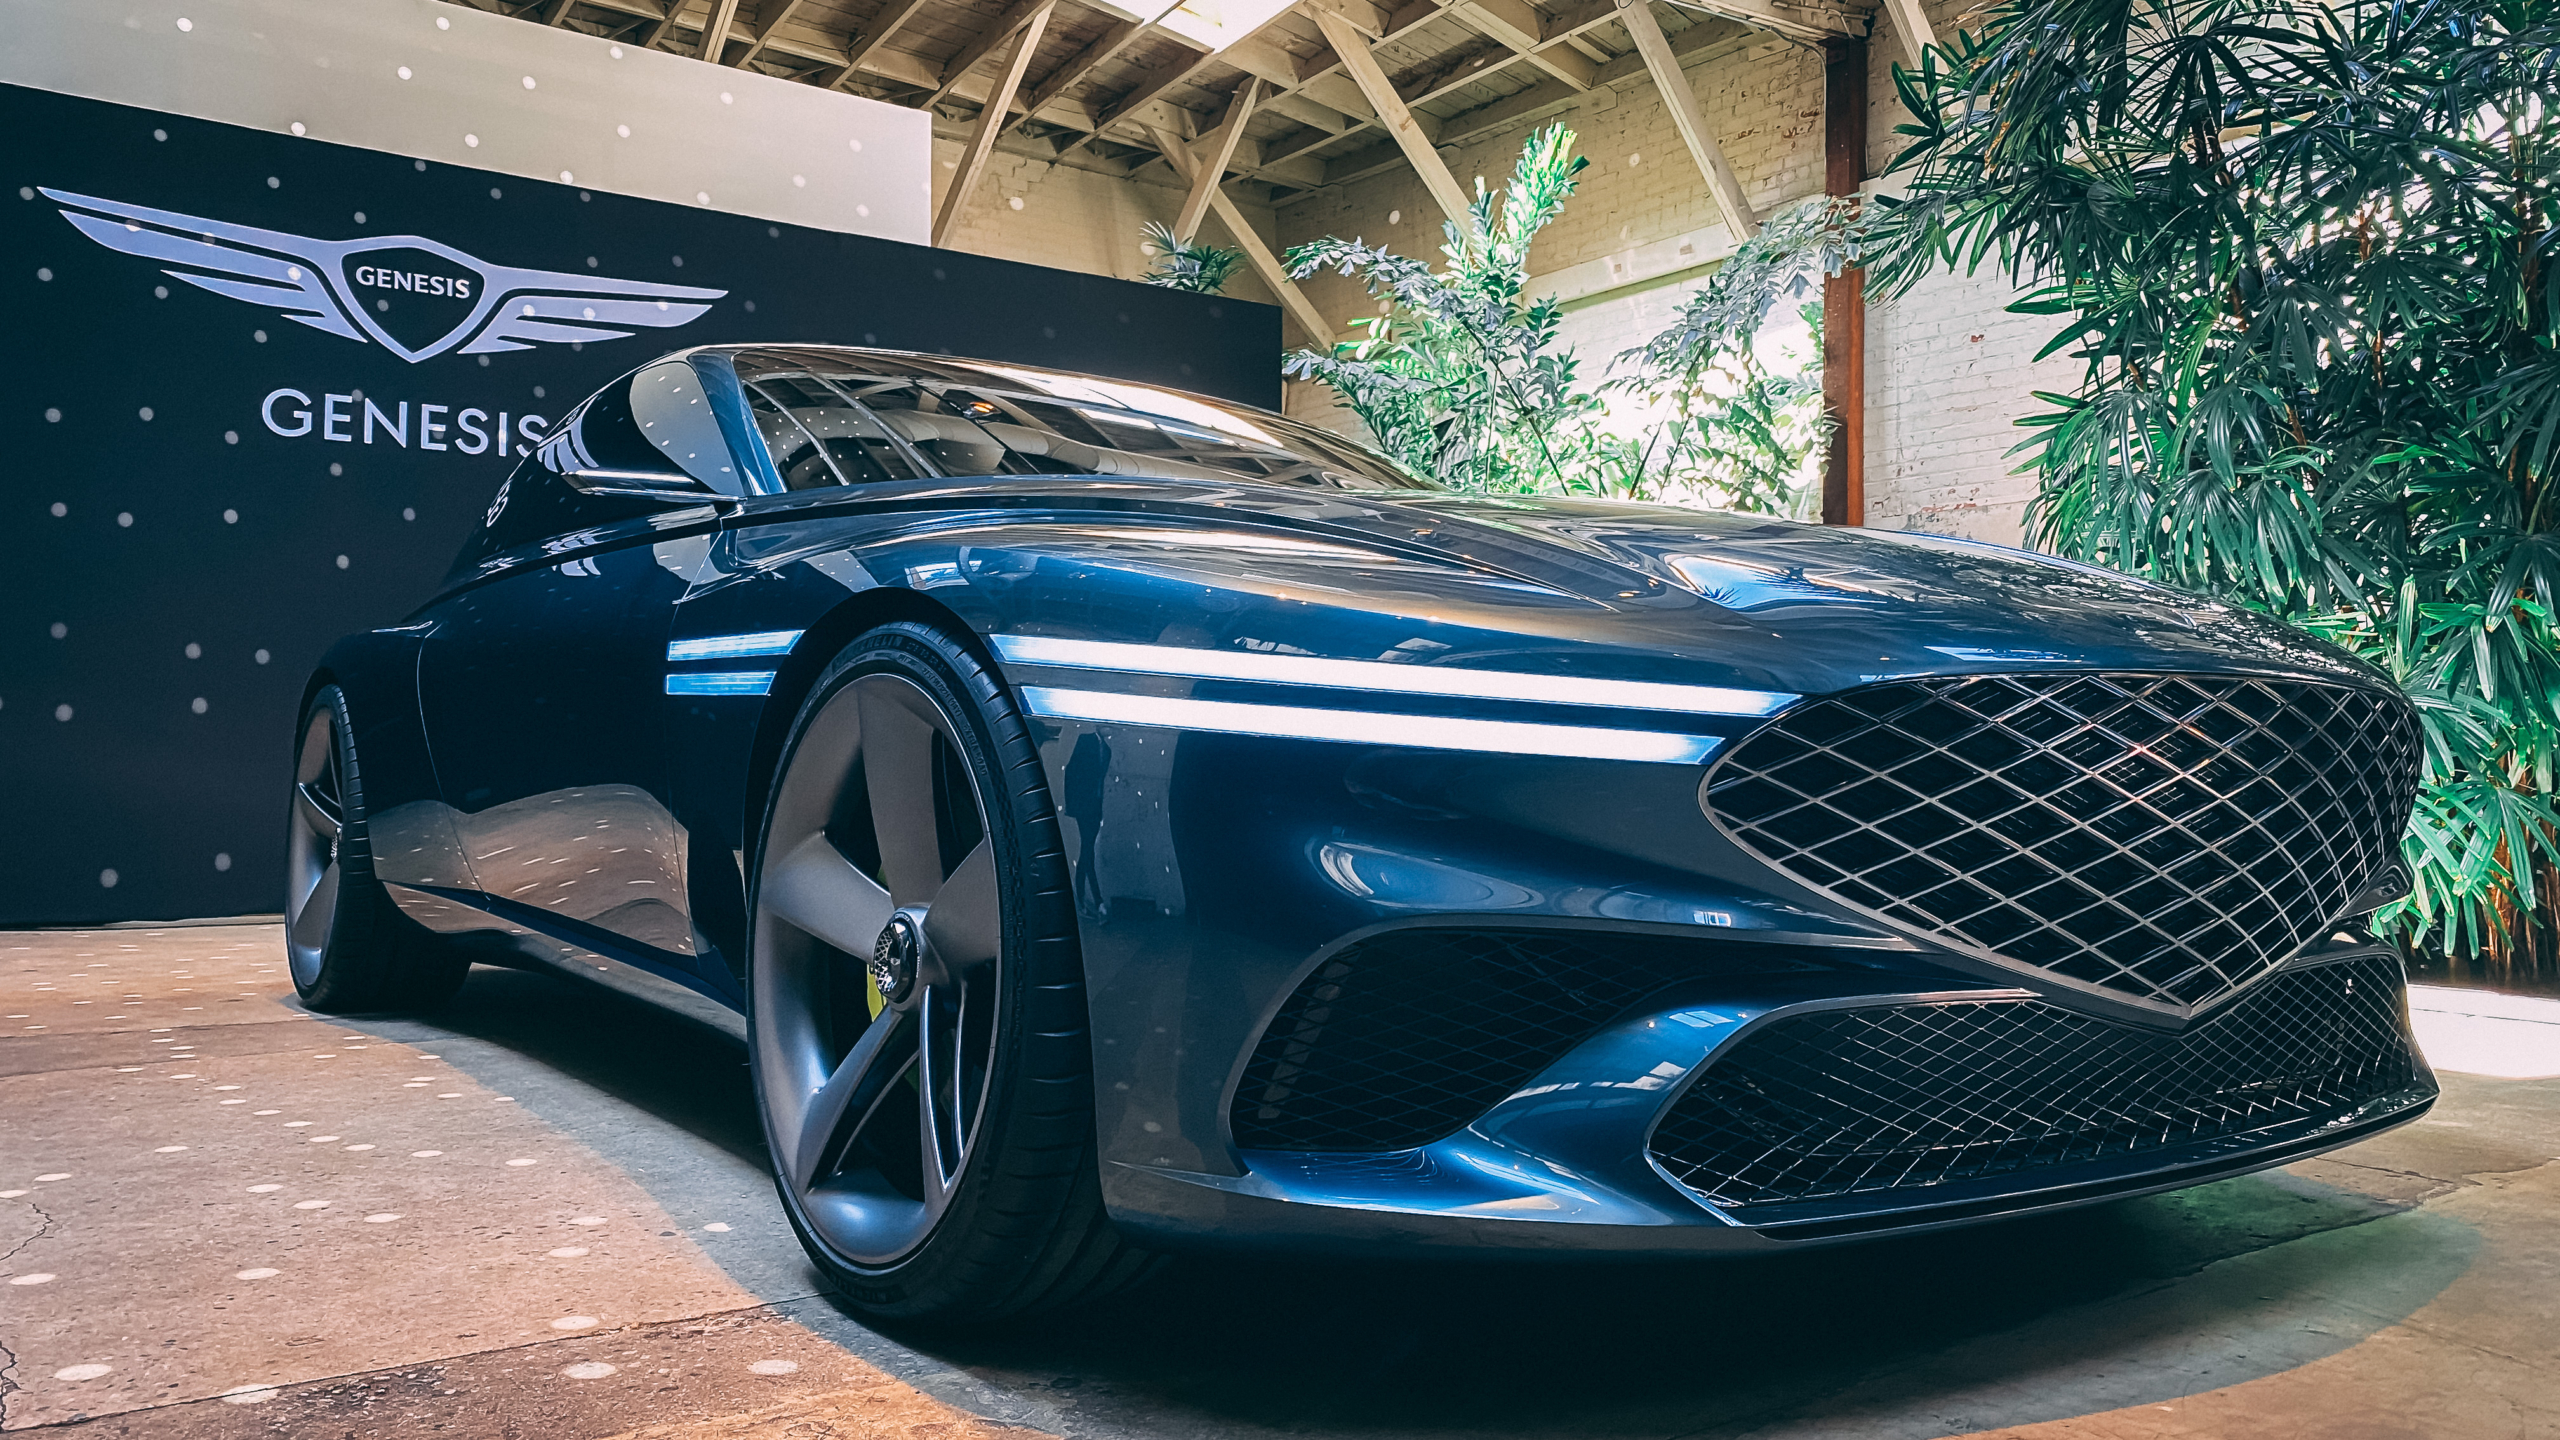 The Genesis X concept car revealed